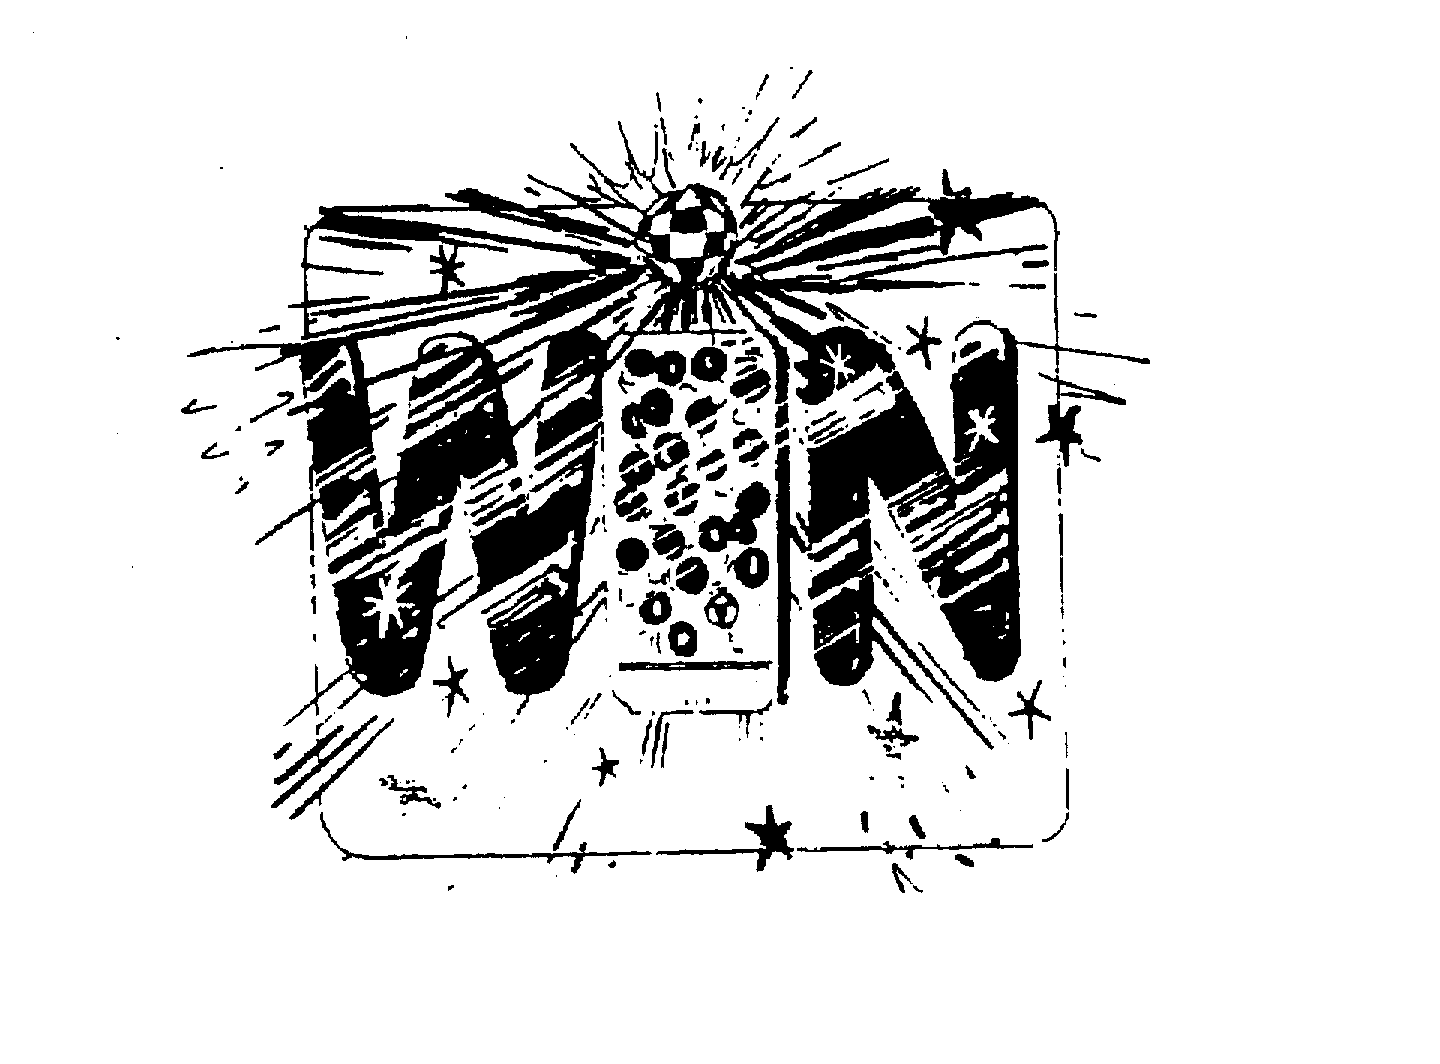 Trademark Logo WIN